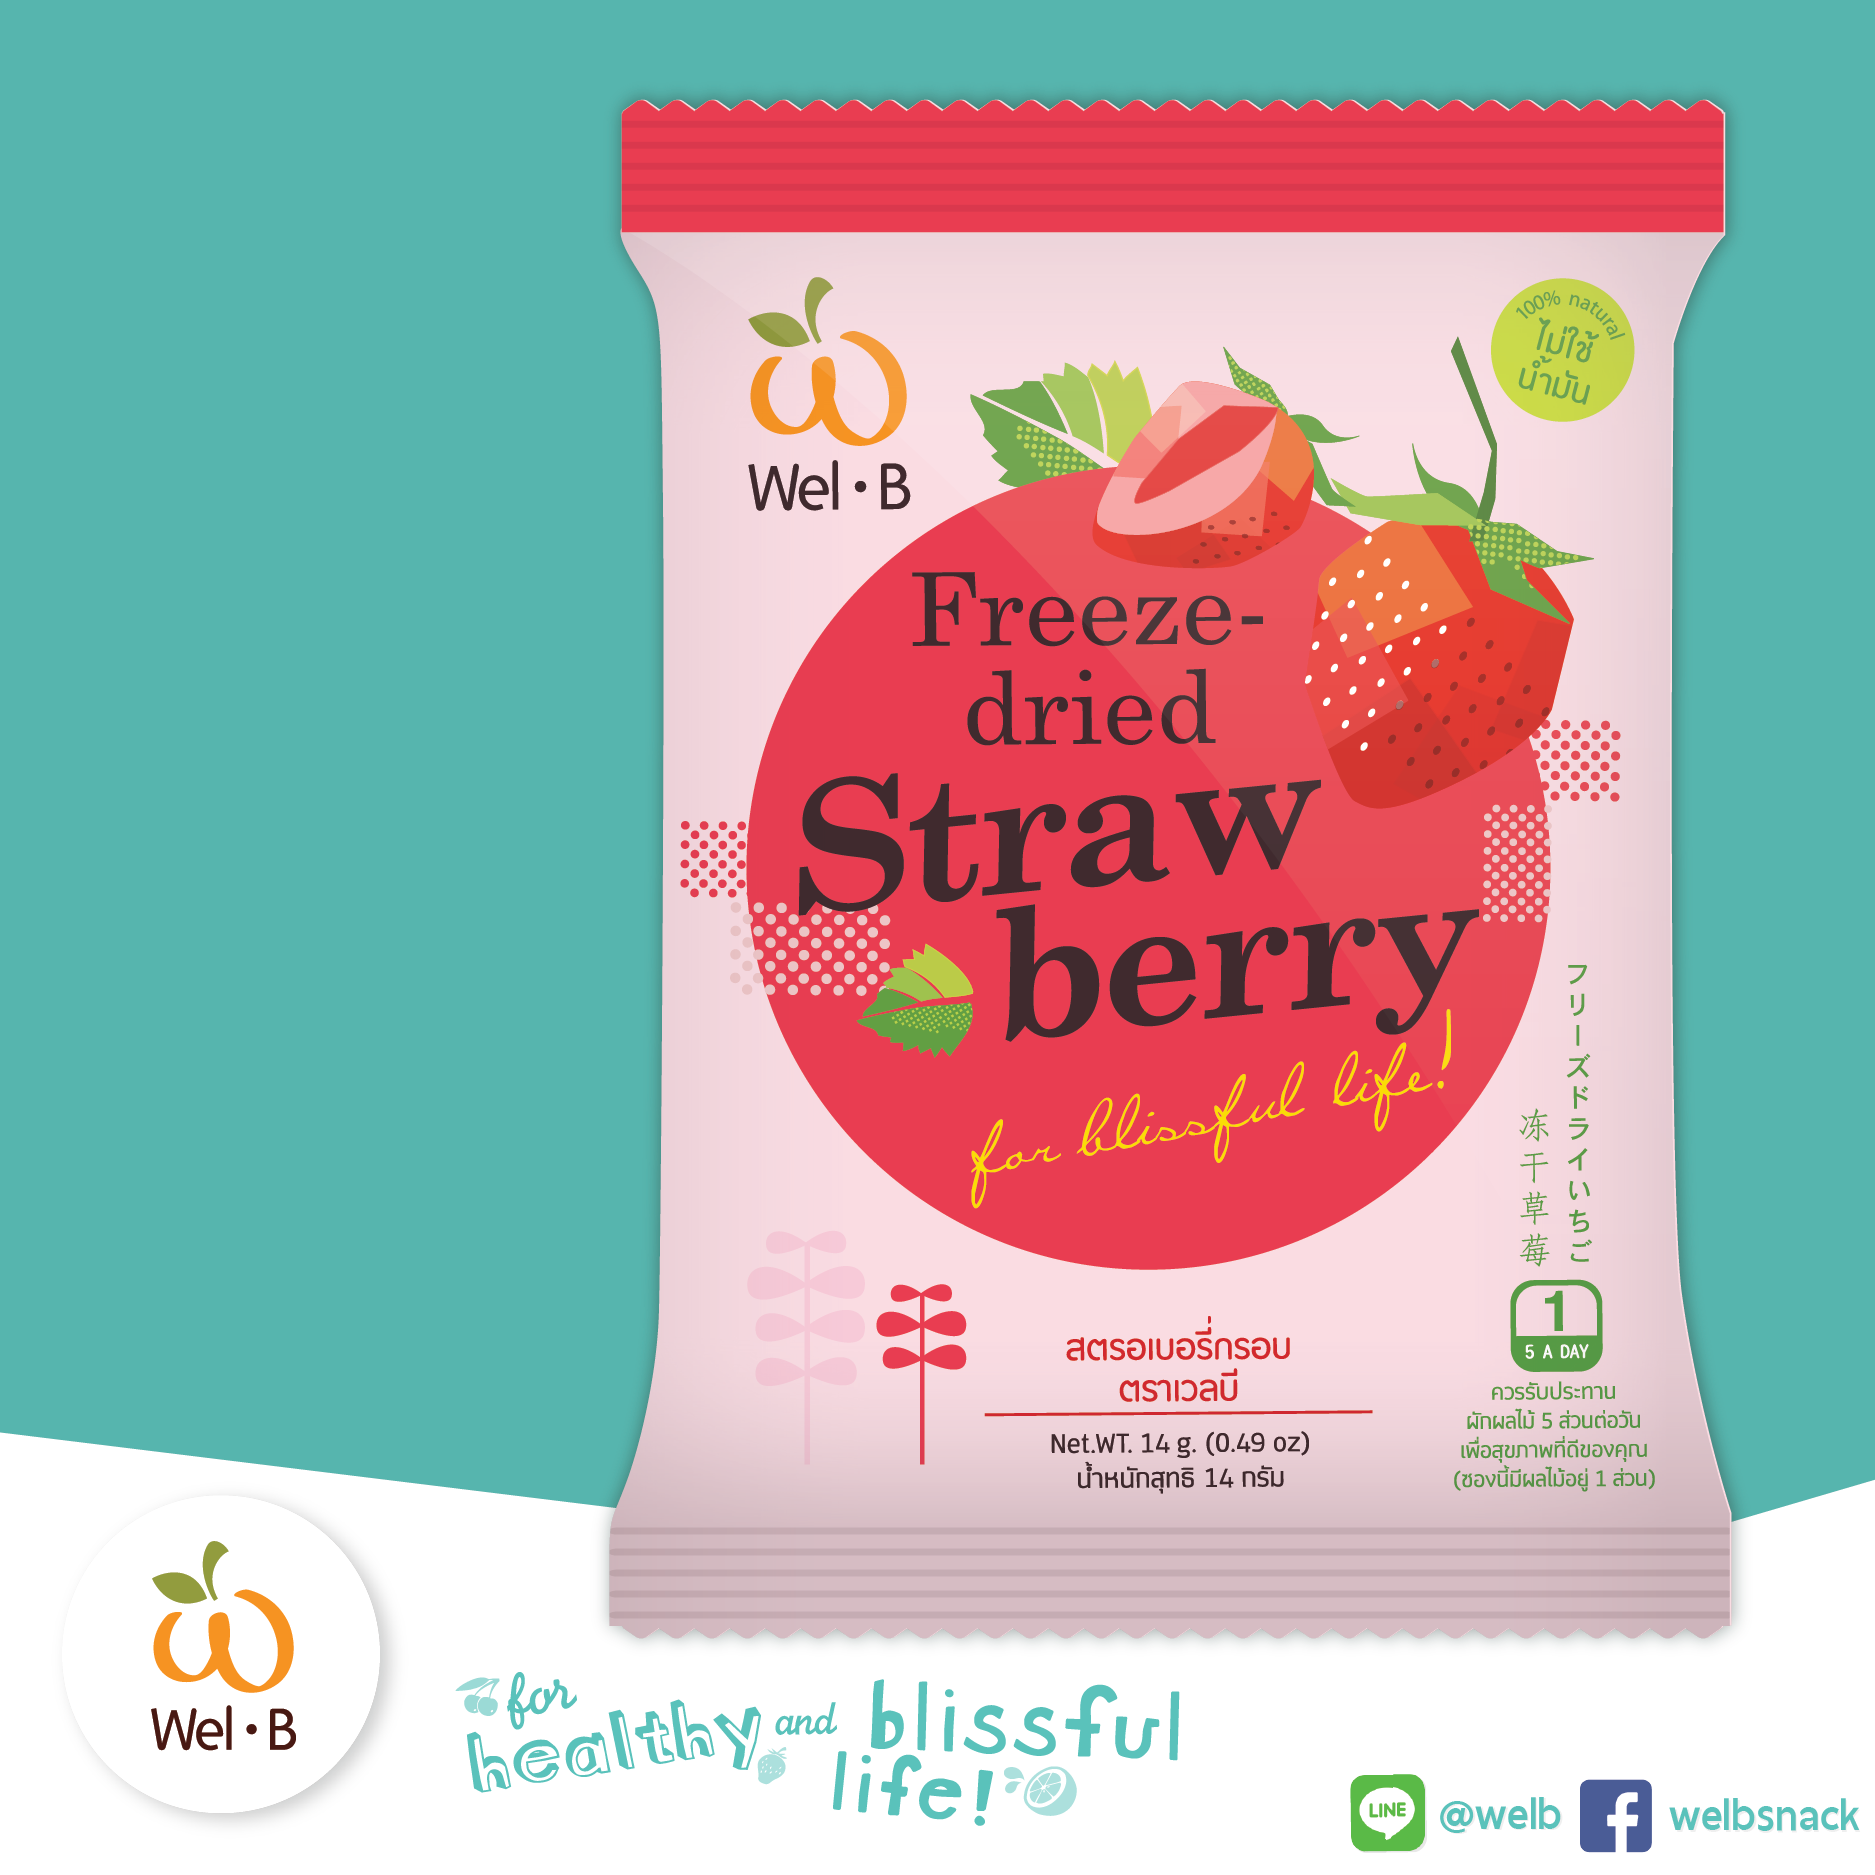 Wel-B FD Strawberry 14g. – WelB Snack